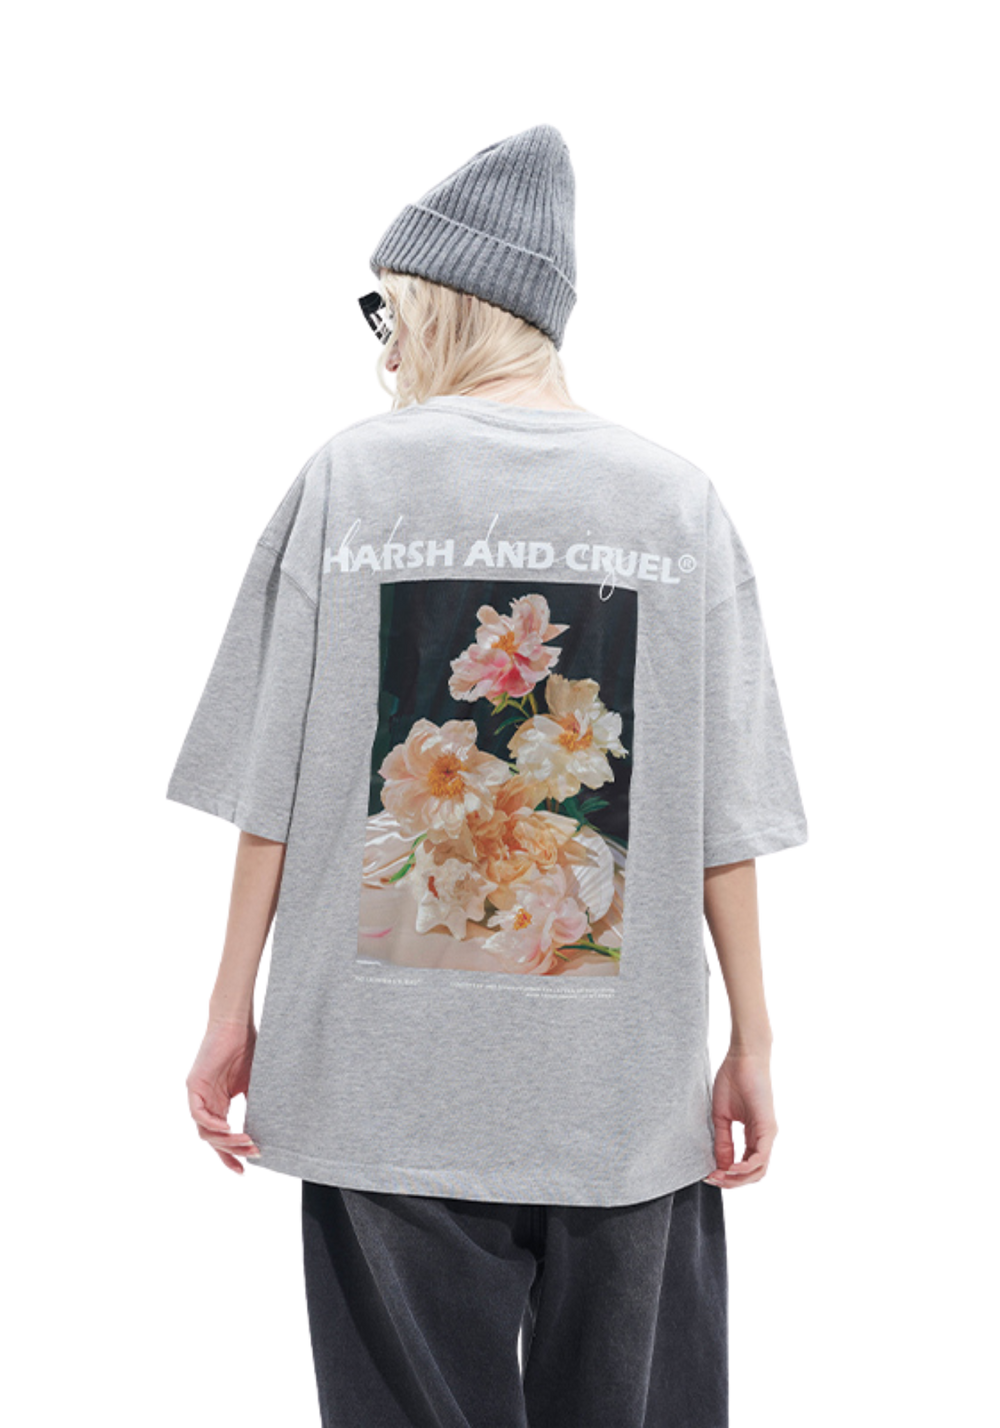 Retro Floral Oil Painting Printed  T-shirt - Grey - PSYLOS1